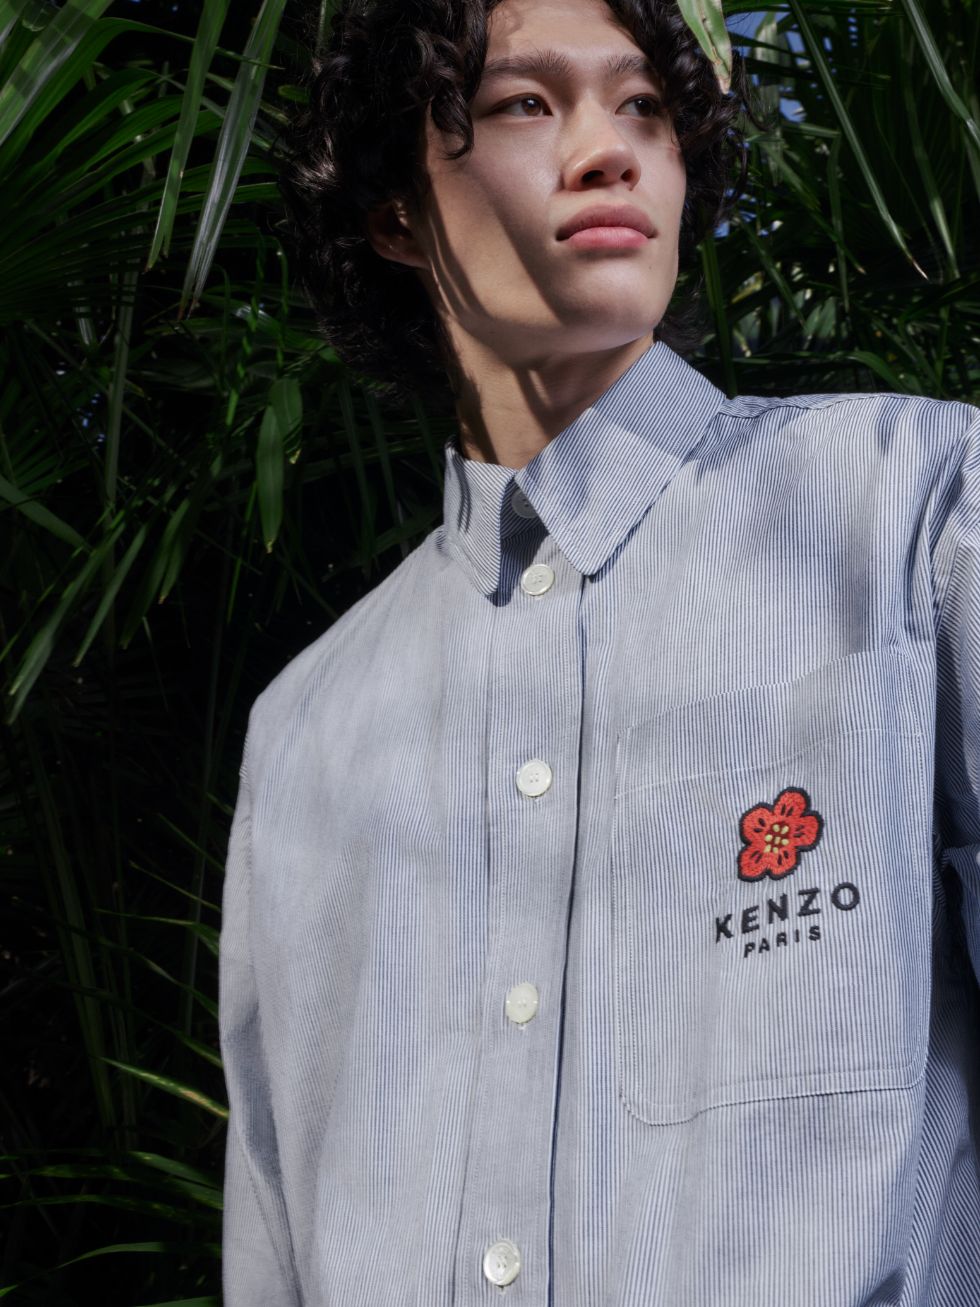 Nigo's Kenzo Boke Flower Collection - Proper Magazine